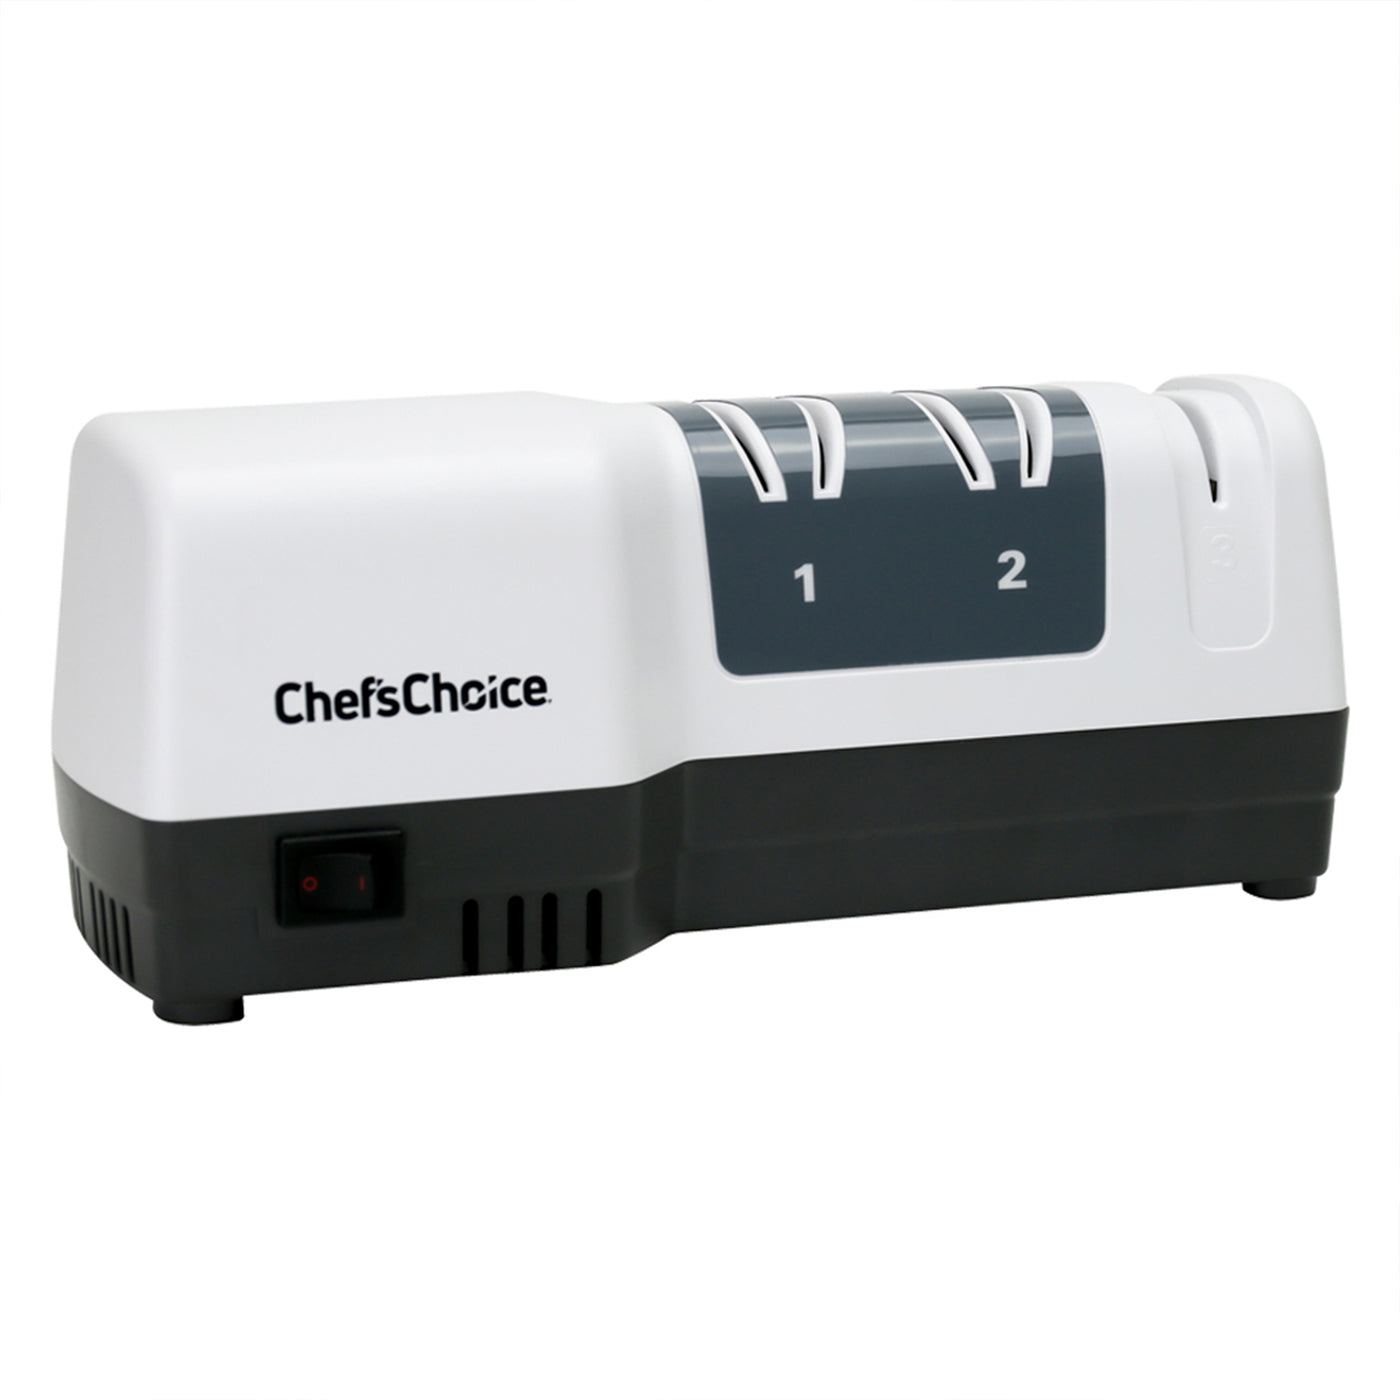 Edgecraft by Chef's Choice Chef'sChoice 250 Hybrid Knife Sharpener